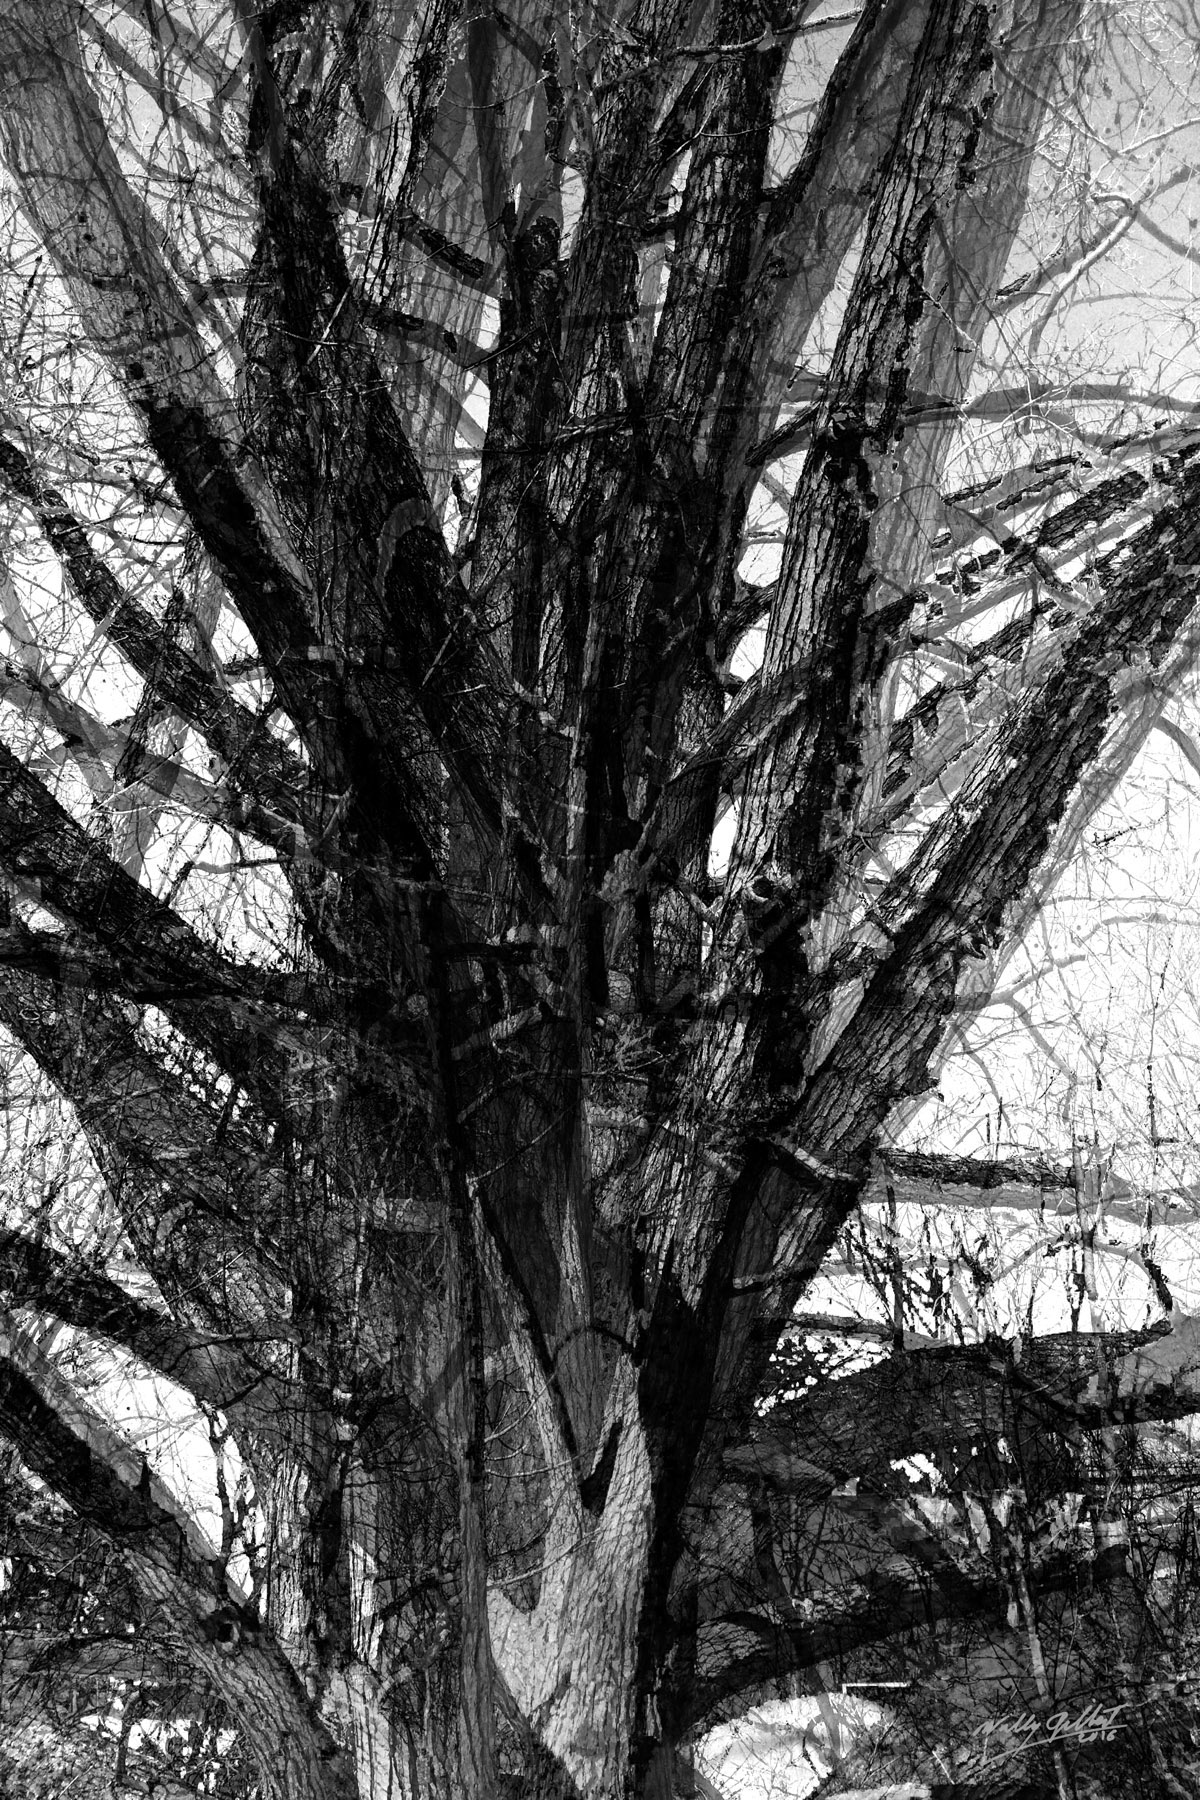  "Broken Tree #2" 30” x 20”, 2016, Print on Aluminum, 1/5 &nbsp;&nbsp; &nbsp;&nbsp;&nbsp; &nbsp;&nbsp;&nbsp; &nbsp;&nbsp;&nbsp; &nbsp;&nbsp;&nbsp; &nbsp;$1000    